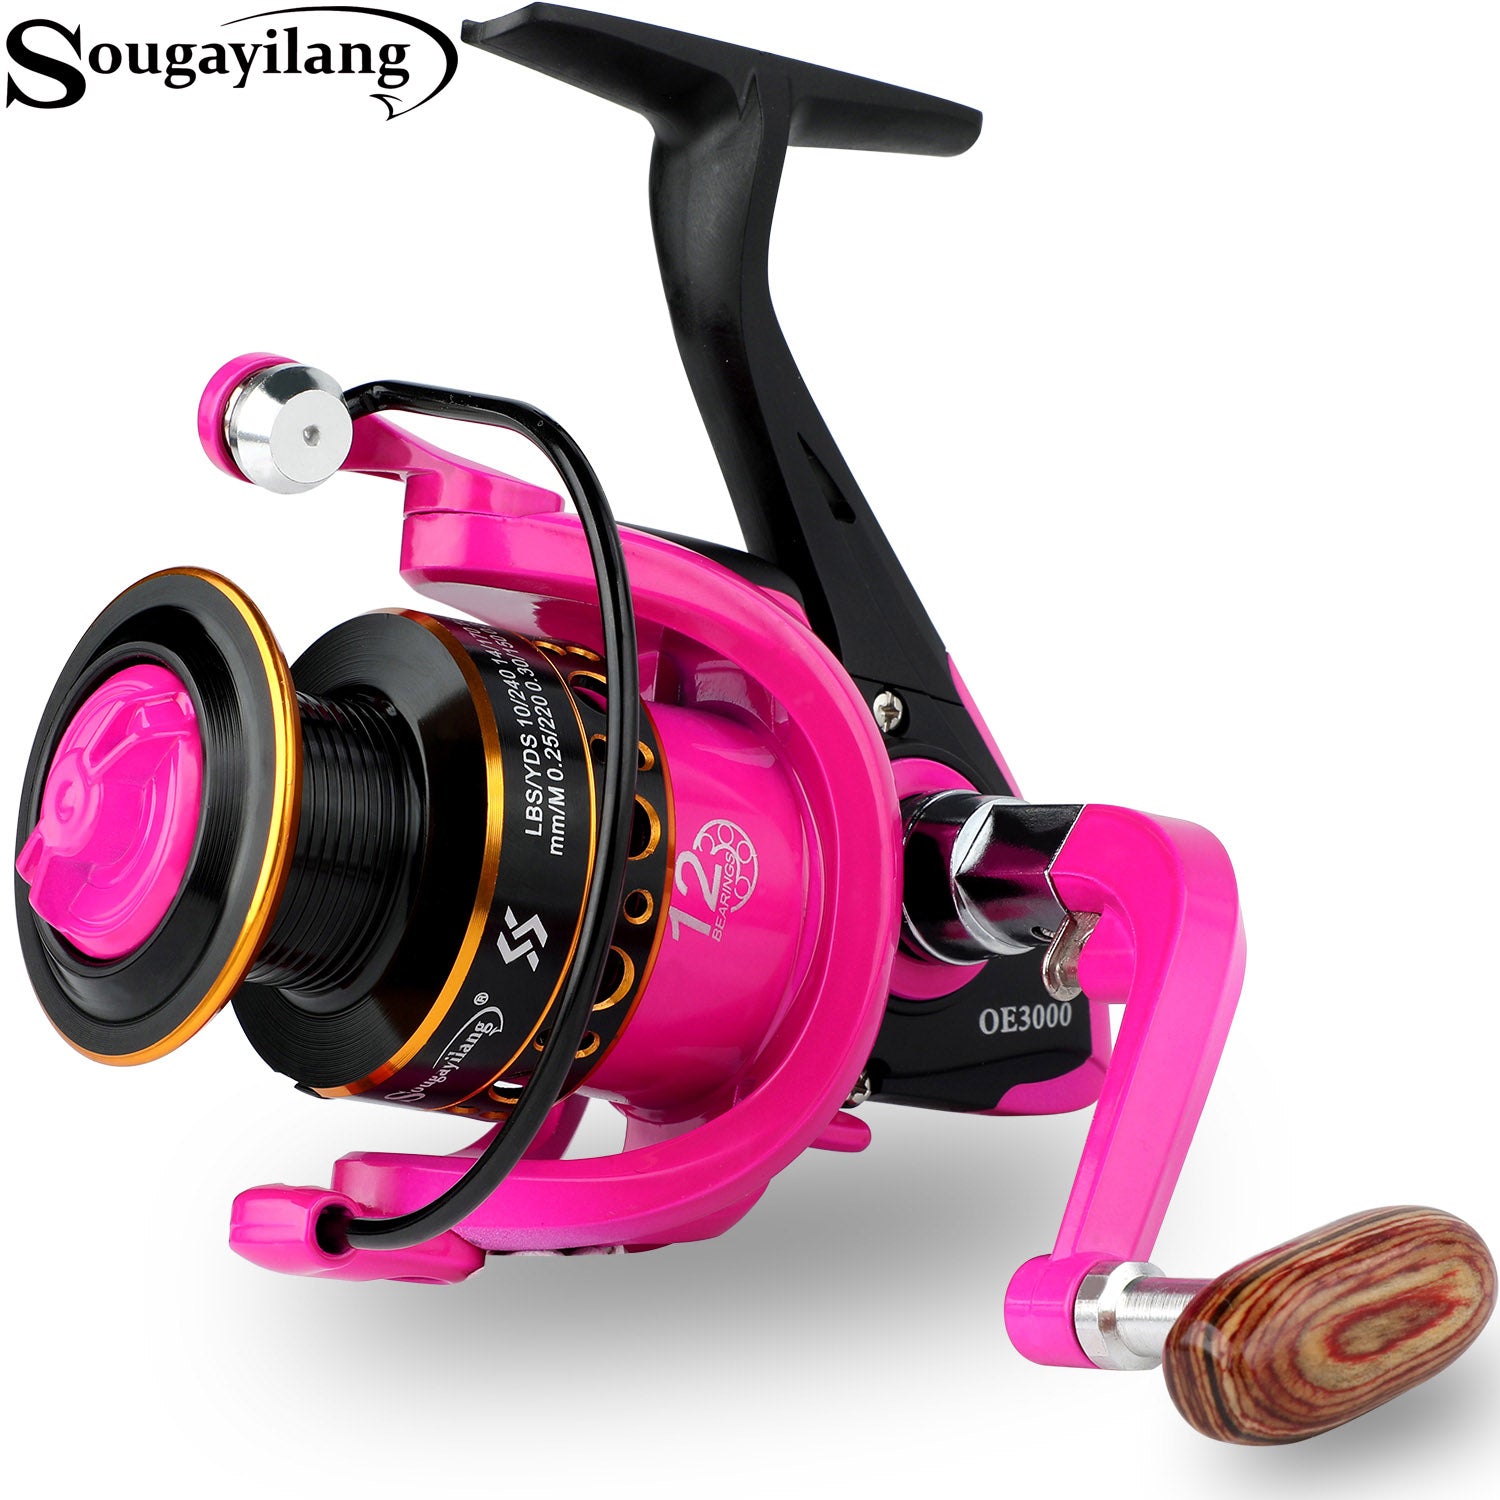 Sougayilang 33LB Drag Carp Fishing Reel Spinning Reels - for Bait Feeder  Fishing Action